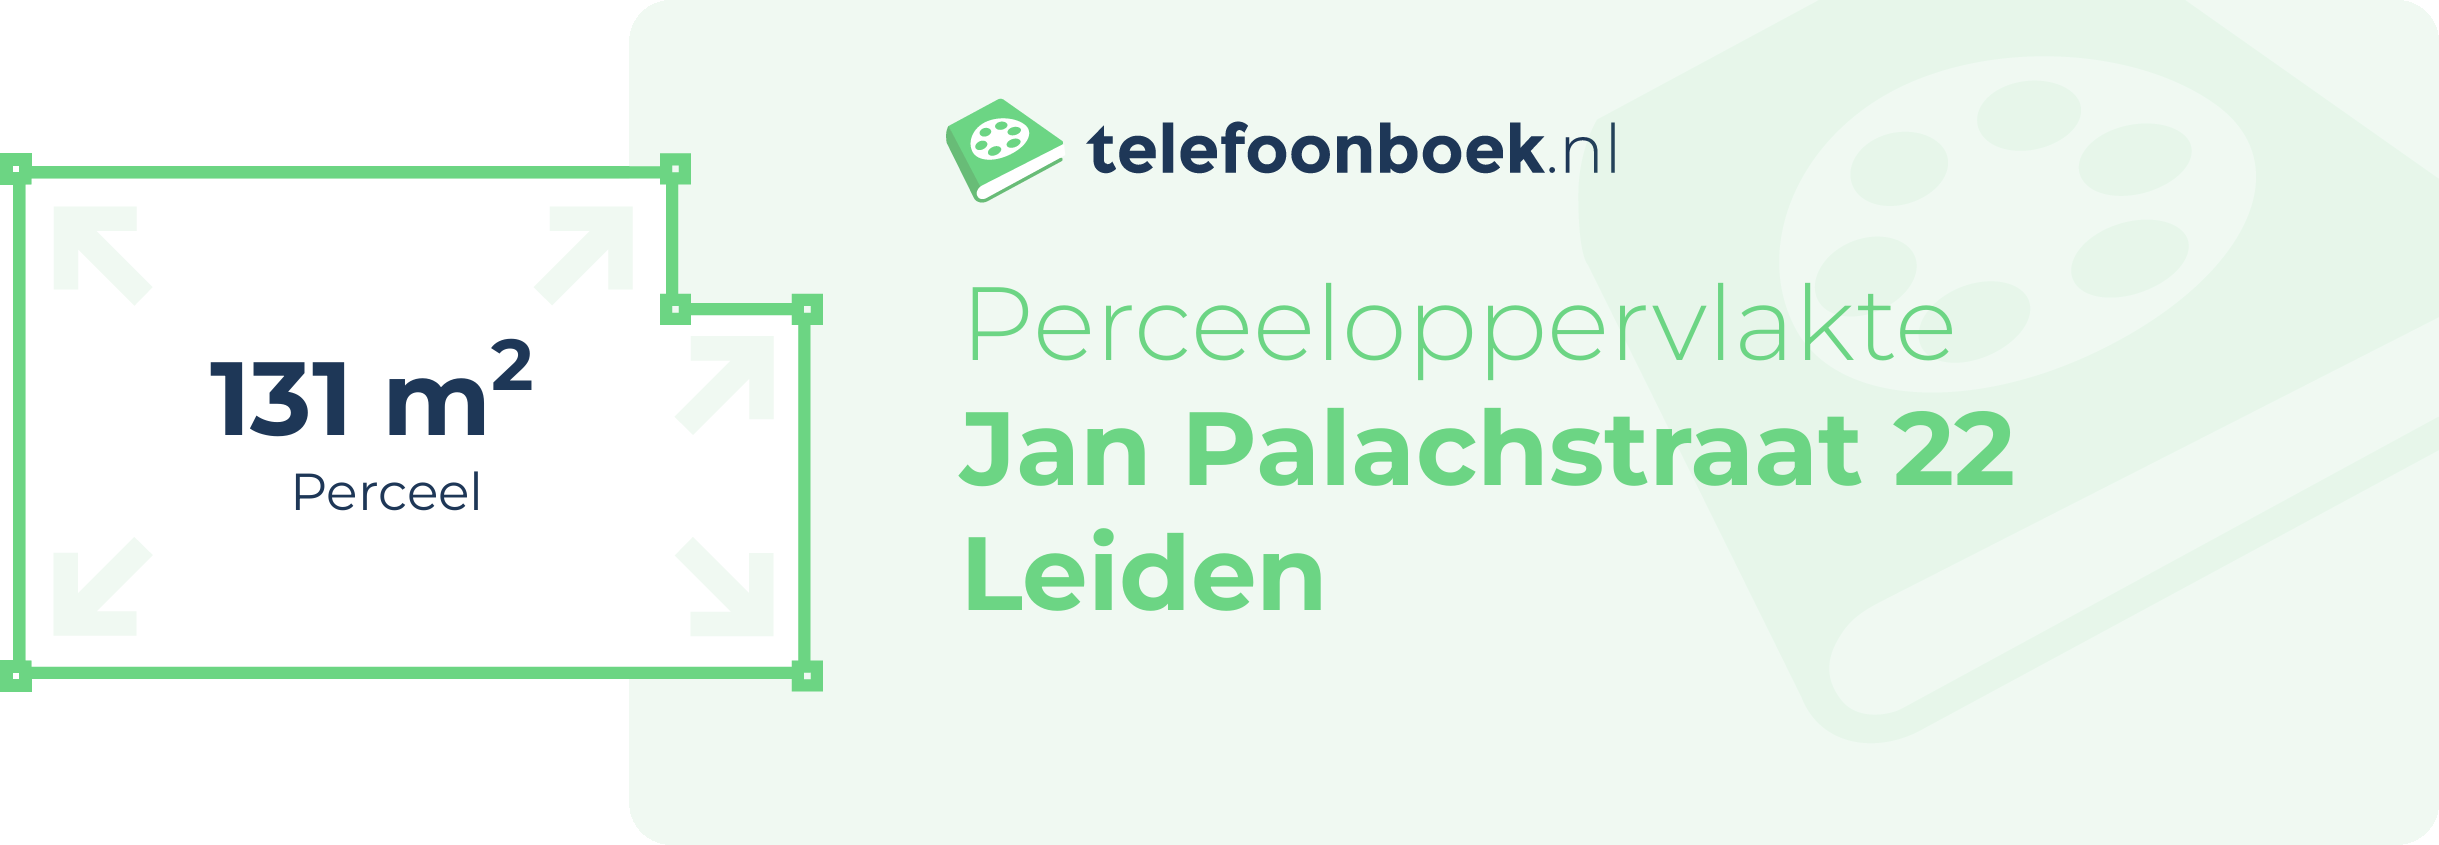 Perceeloppervlakte Jan Palachstraat 22 Leiden